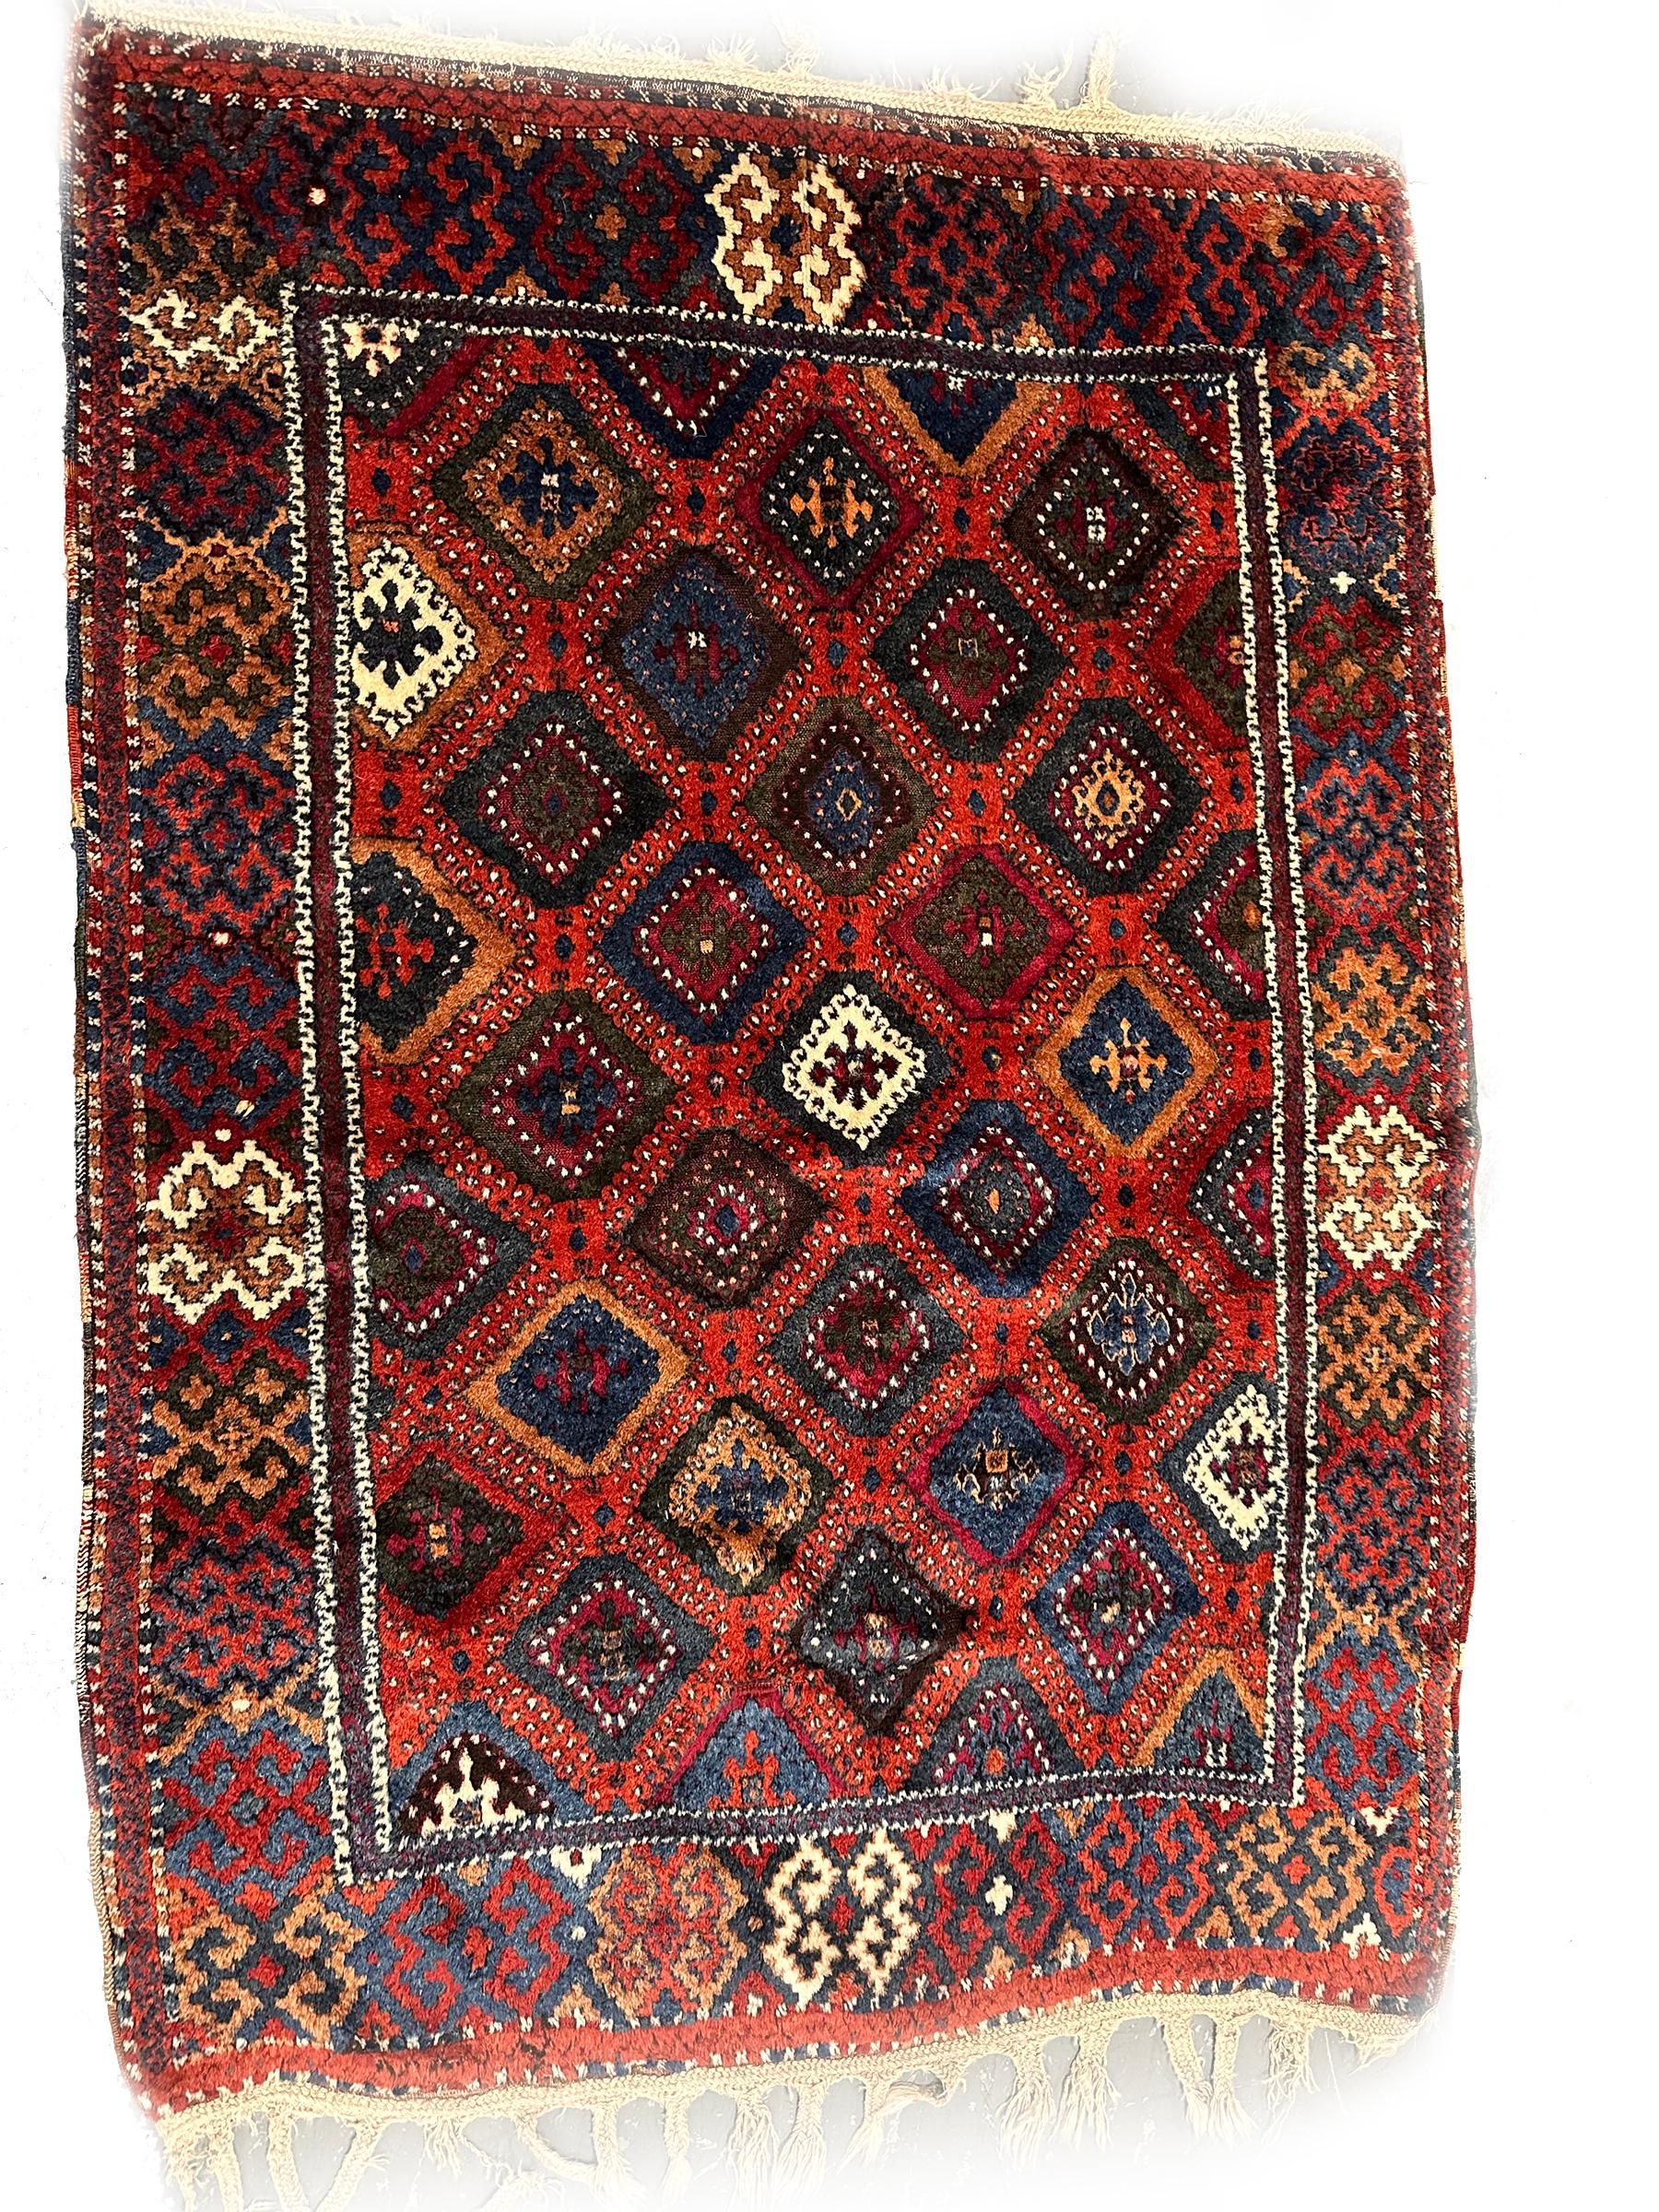 1880 Rare Antique Turkish Rug Tribal Geometric 4x6

